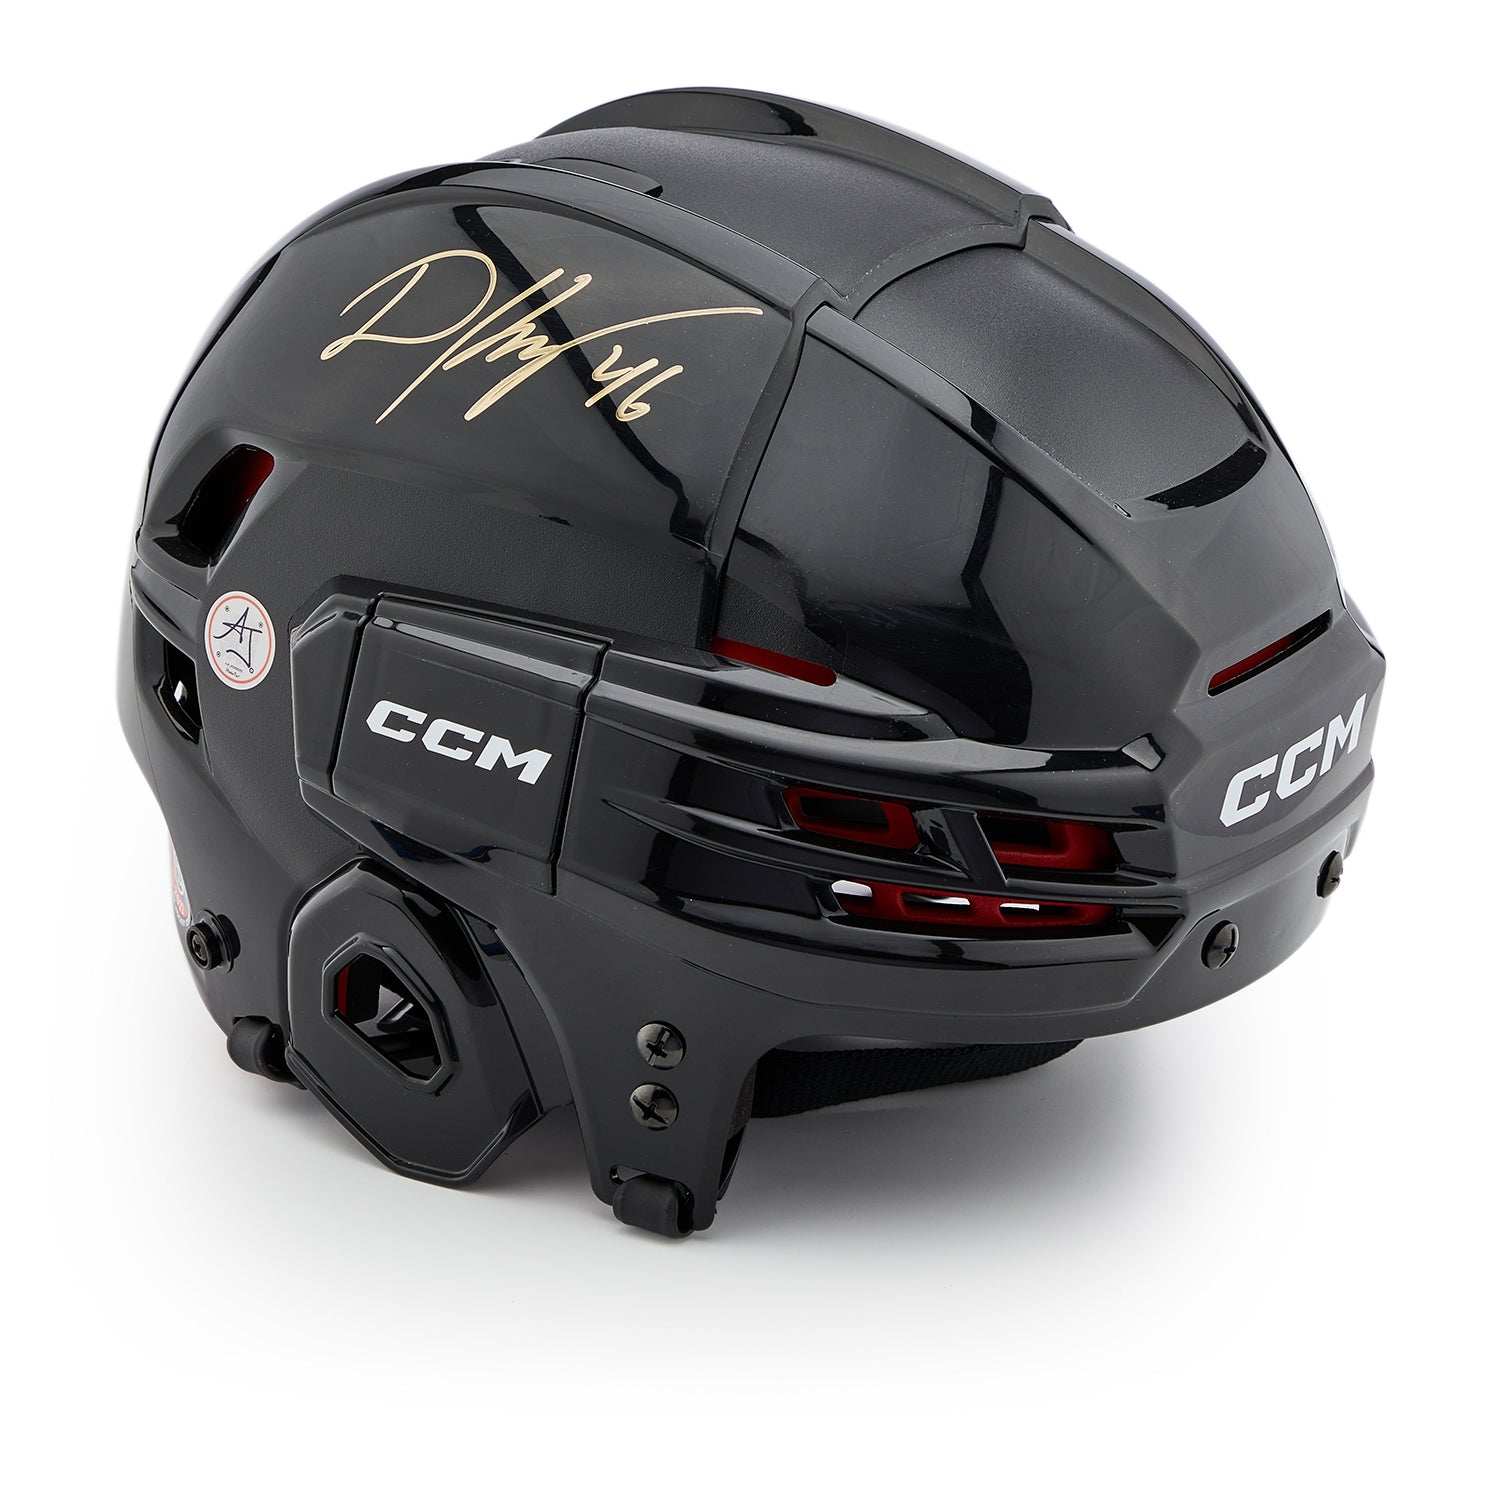 David Krejci Autographed Black CCM Tacks Hockey Helmet